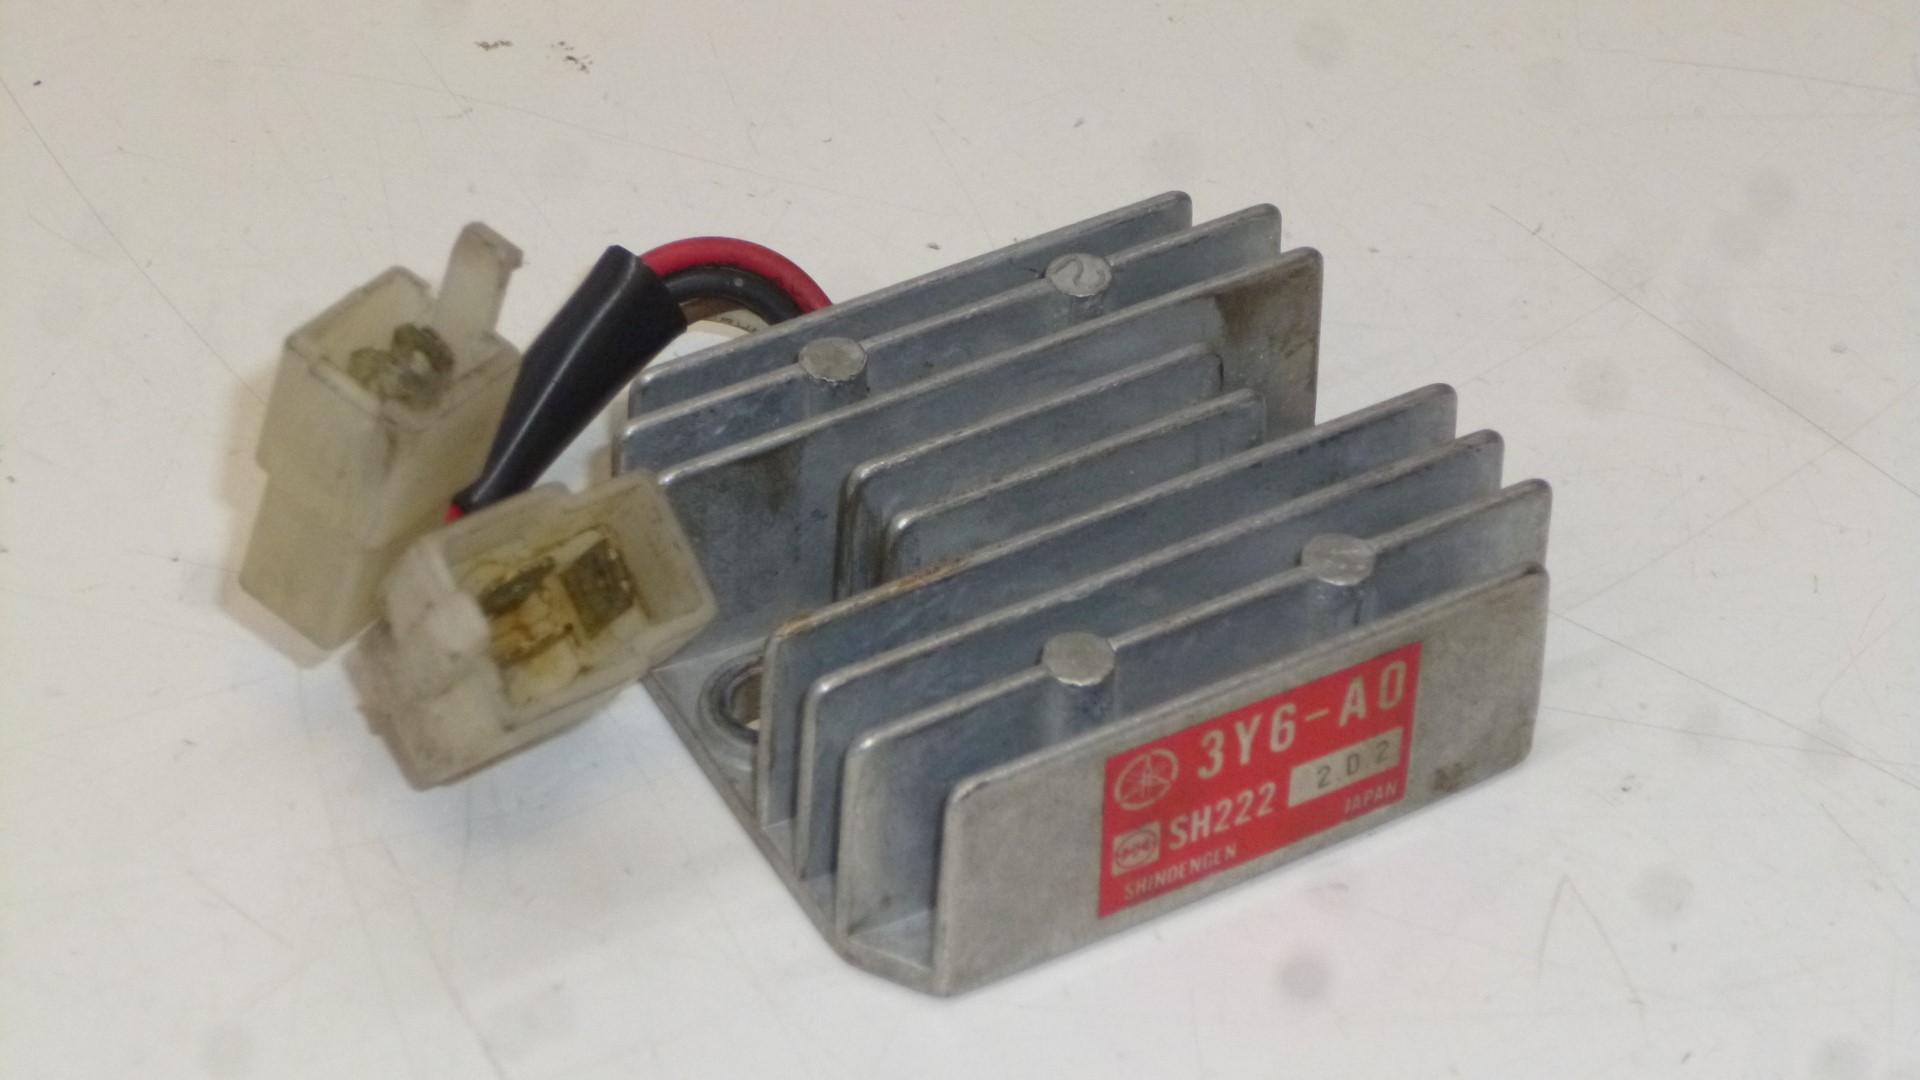 Spannungsregler Laderegler voltage regulator für Yamaha Sr 250 80-82 3Y6-AO